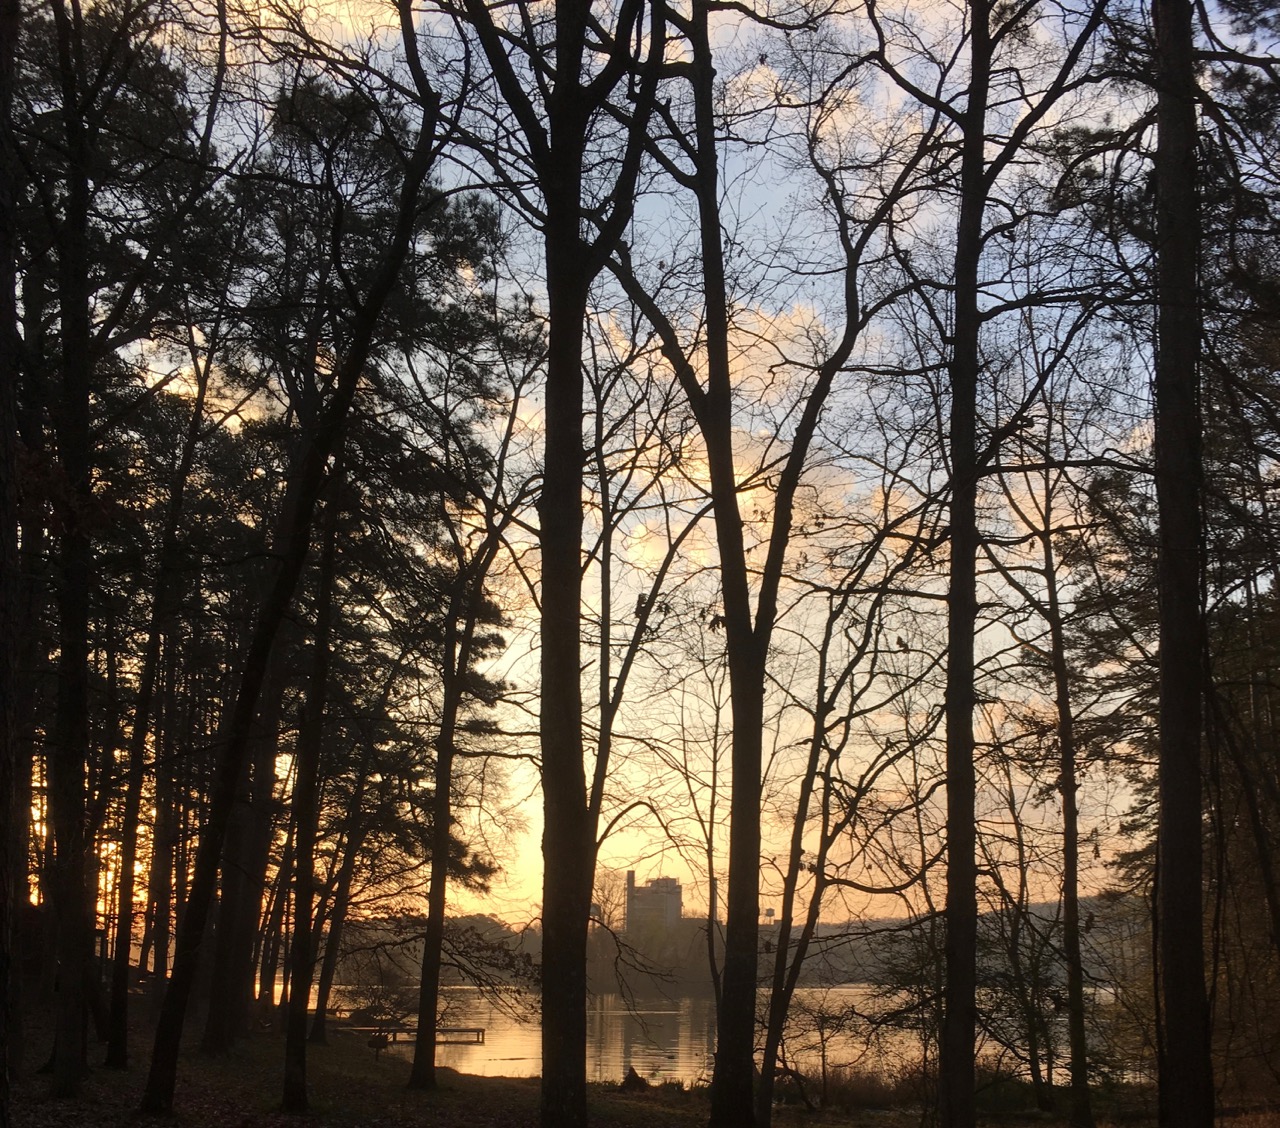 sunrise through the trees at Lake Catherine, Arkansas